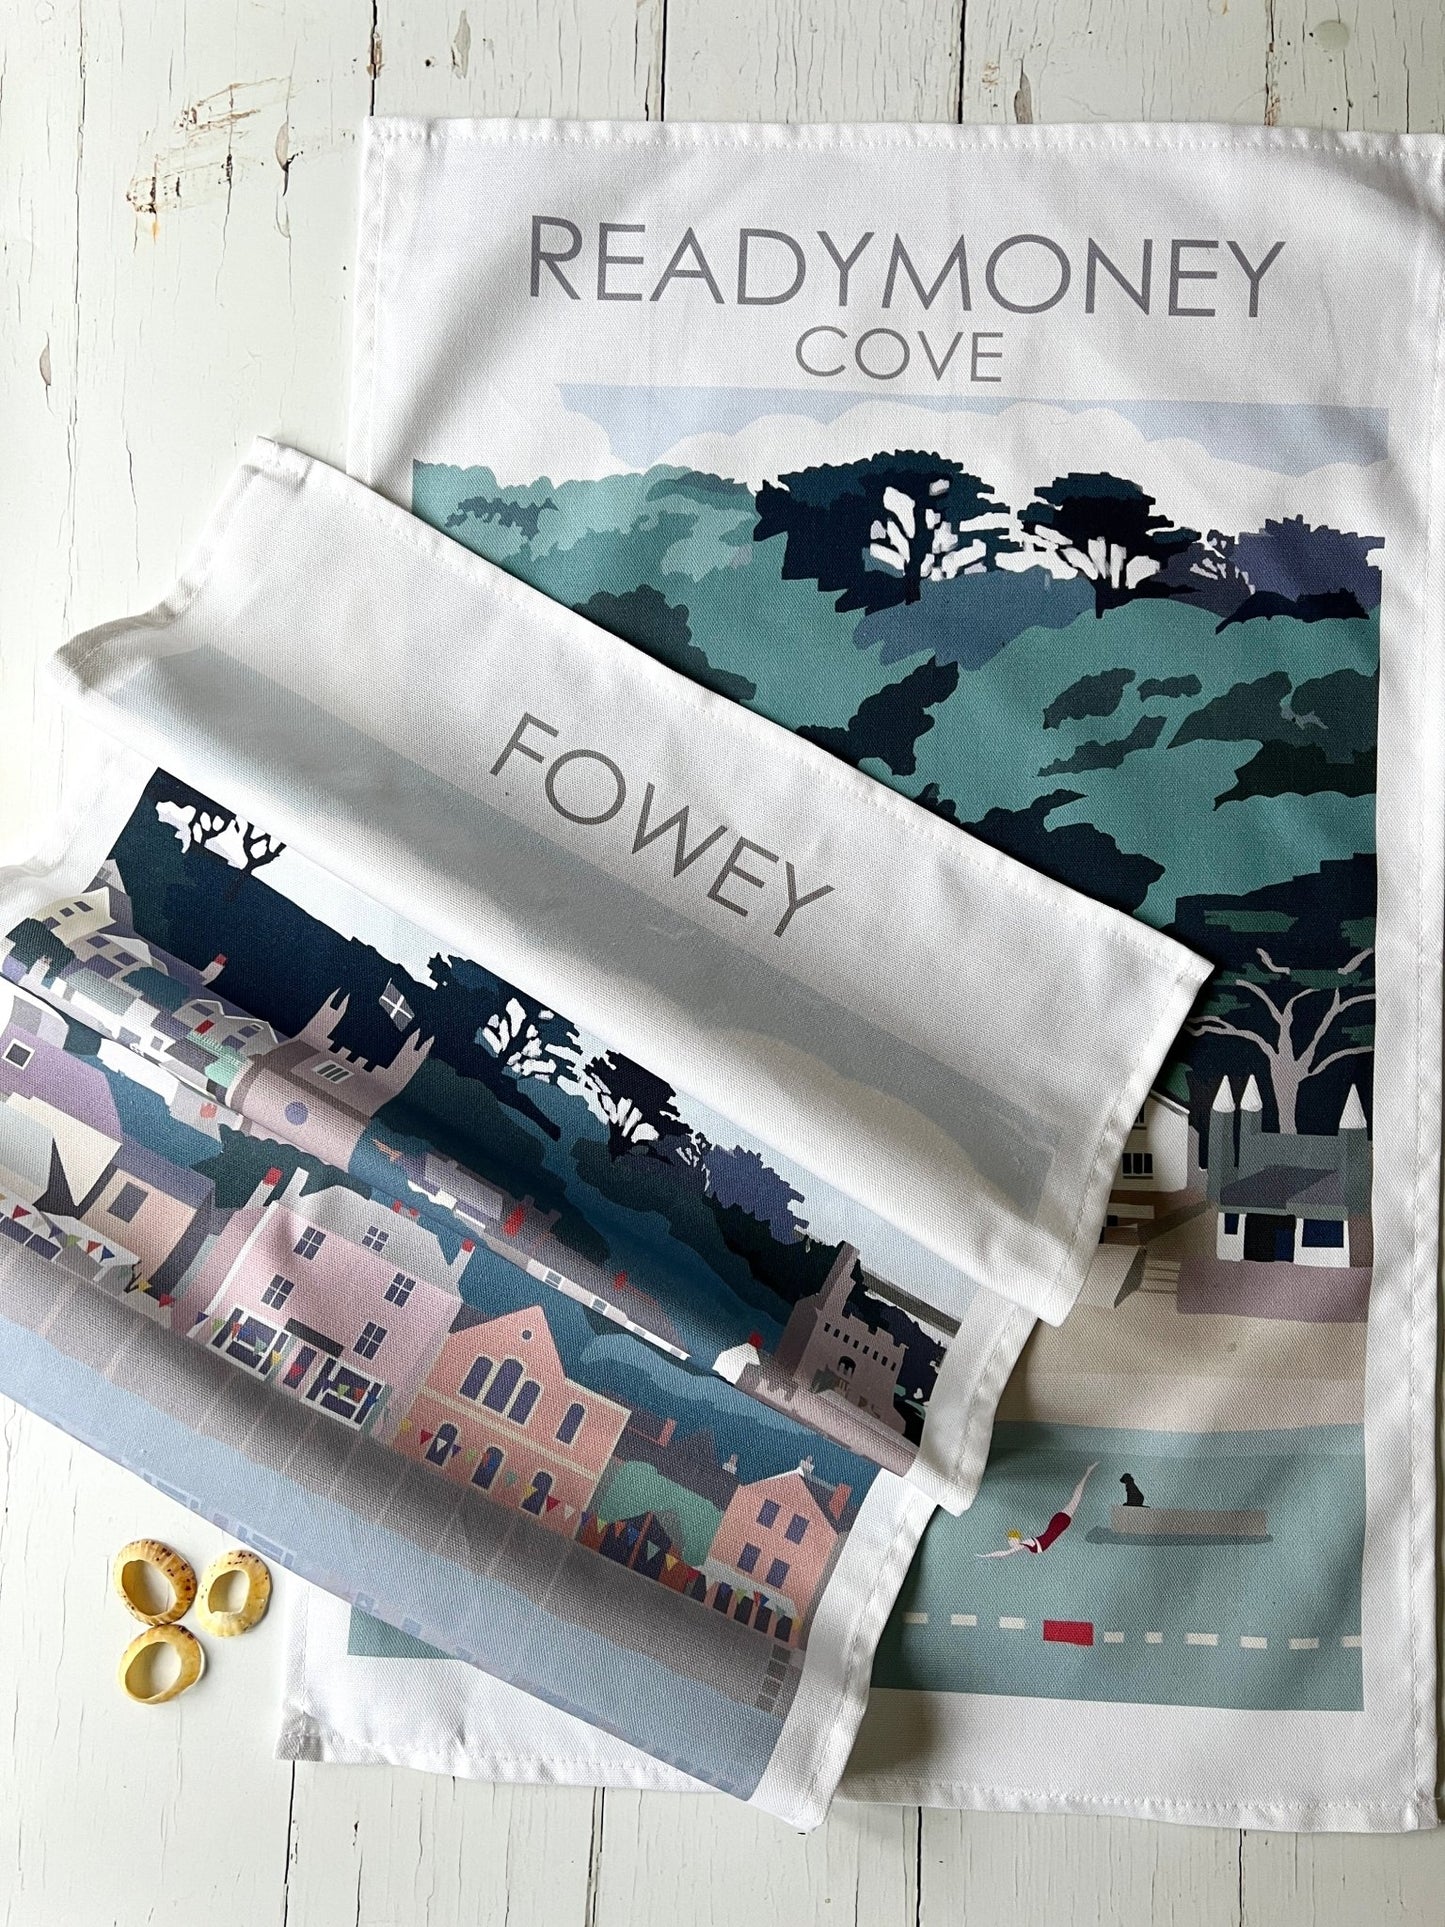 Readymoney Cove & Fowey Illustrated Tea Towels - Readymoney Beach Shop